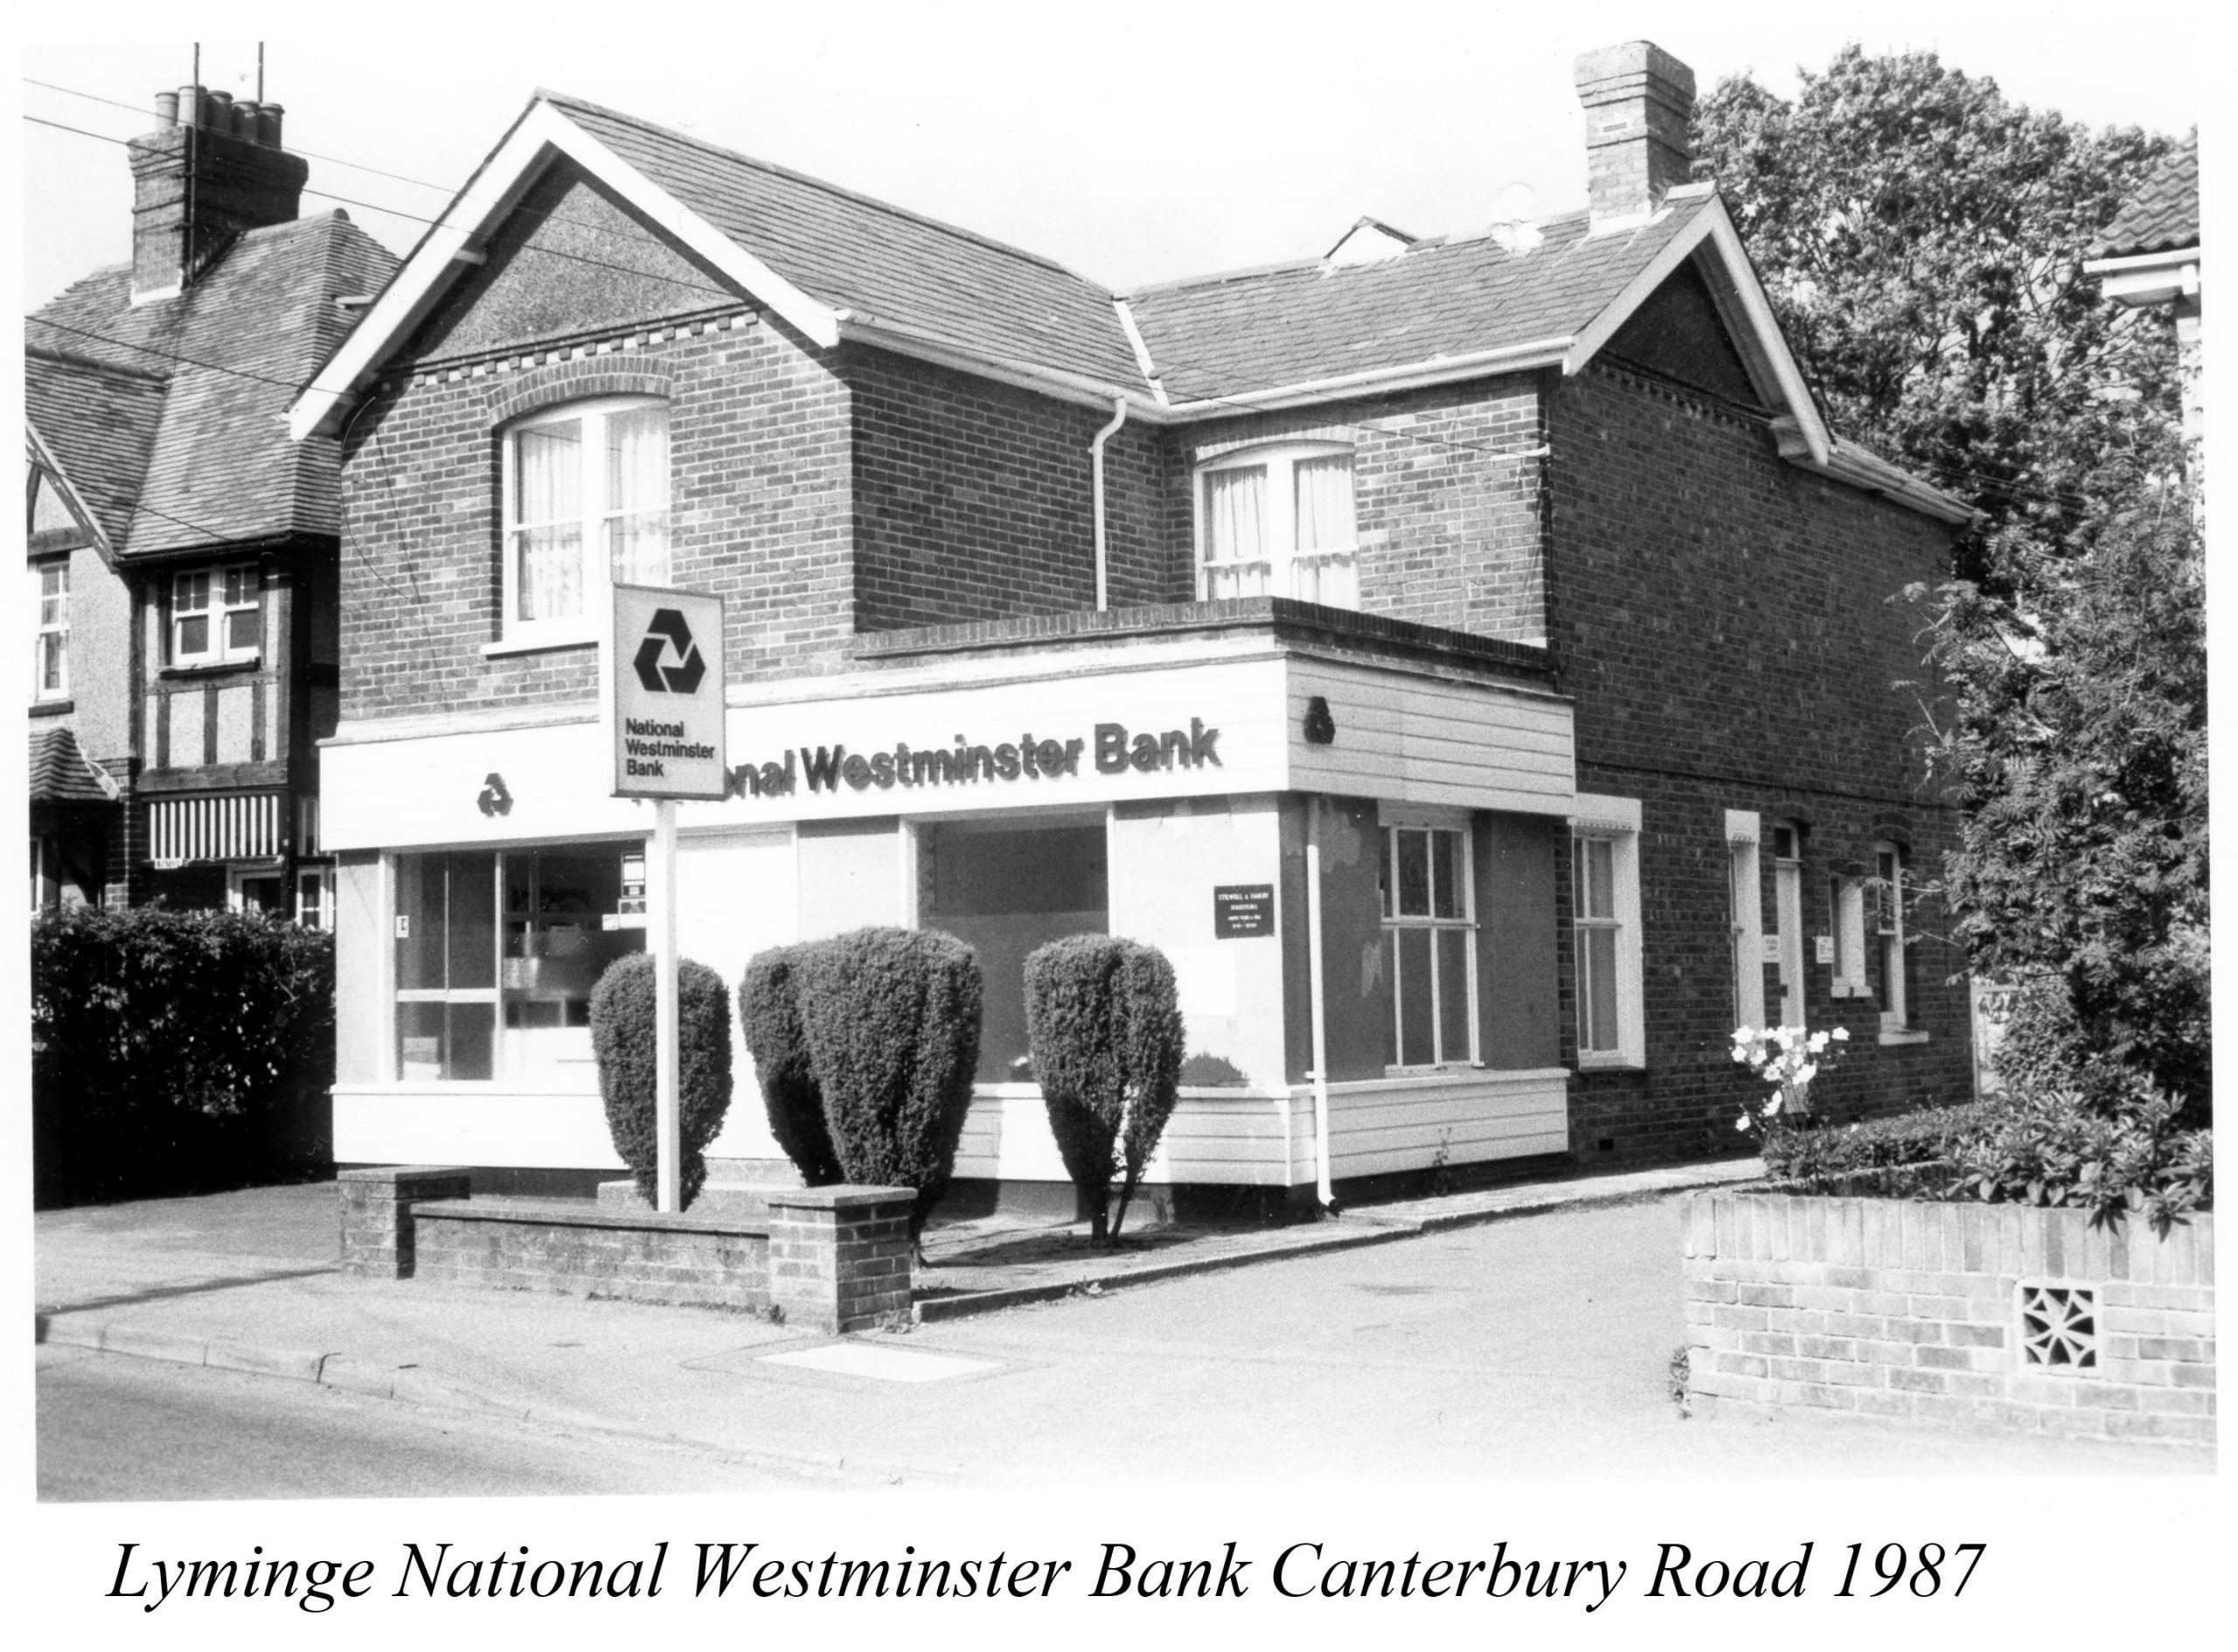 NatWest Bank Lyminge, Canterbury Rd